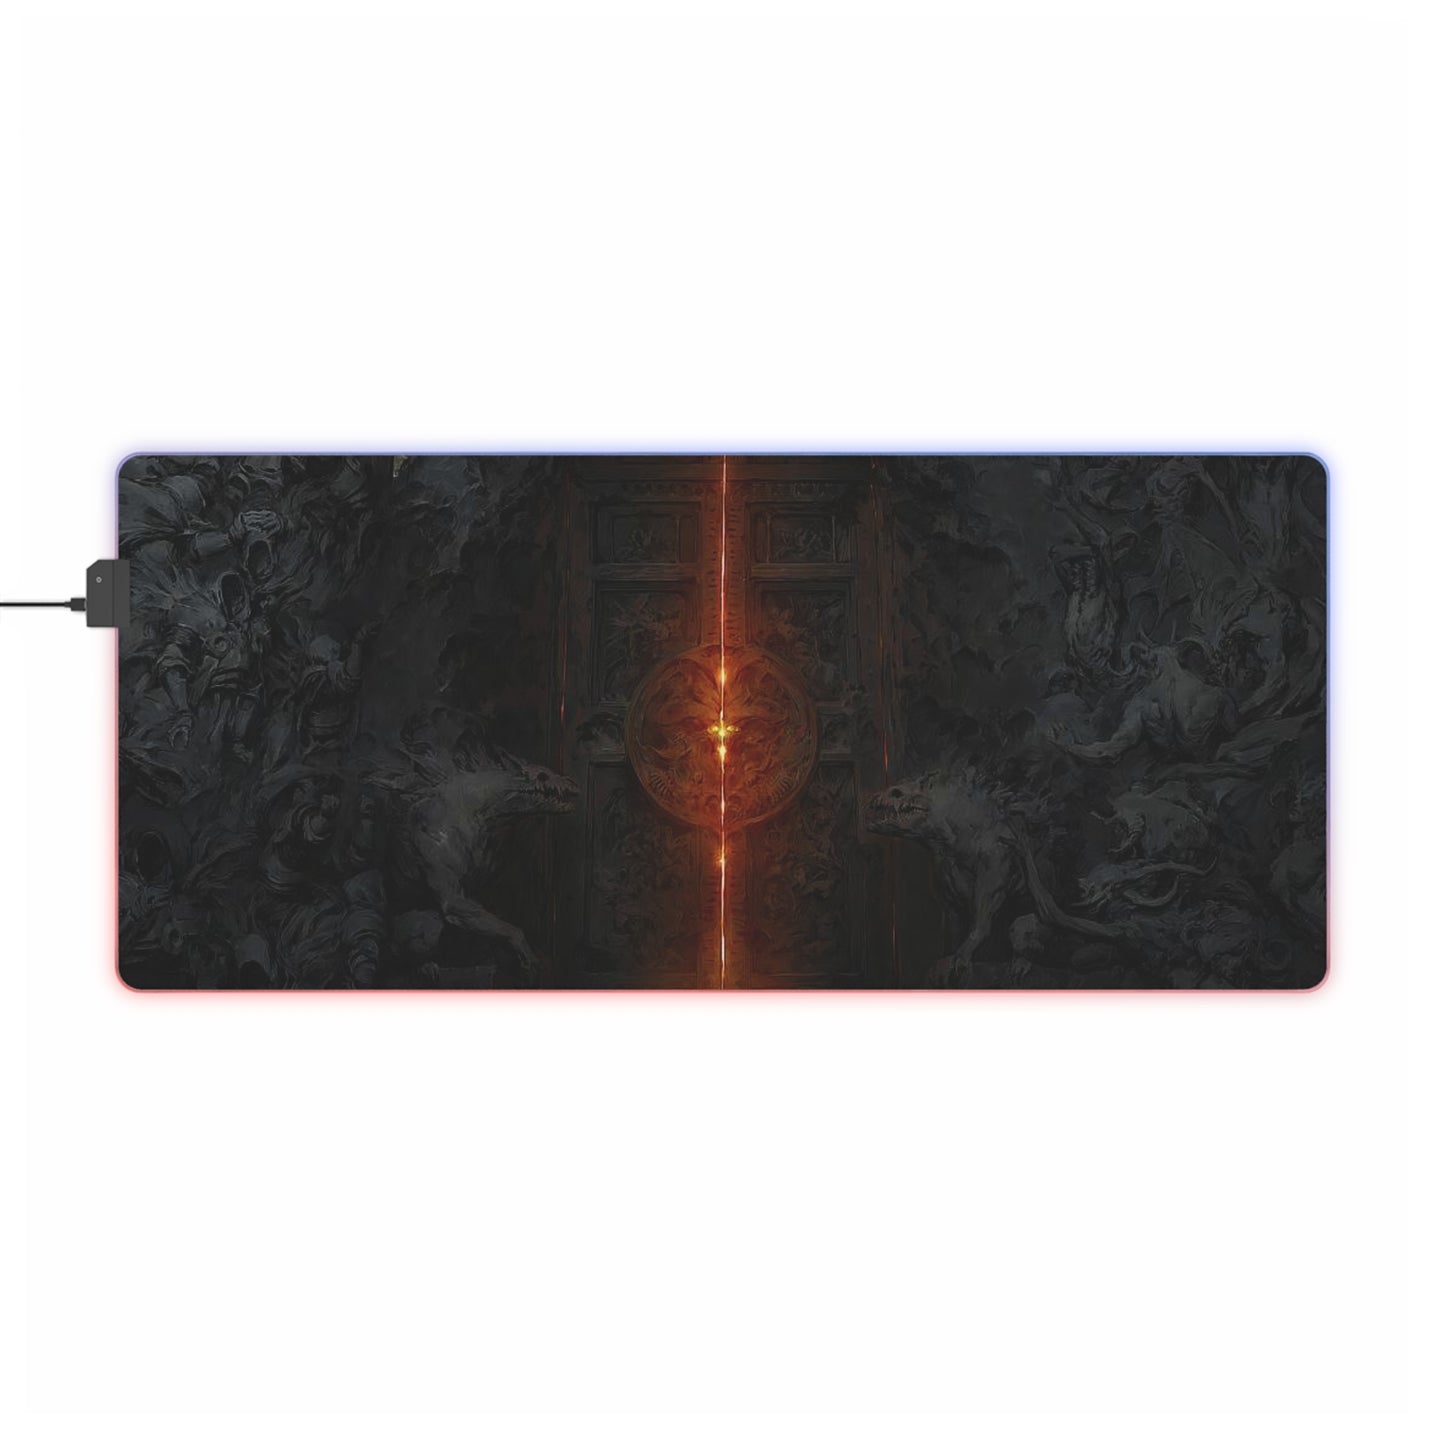 Diablo IV 002 LED Gaming Mouse Pad